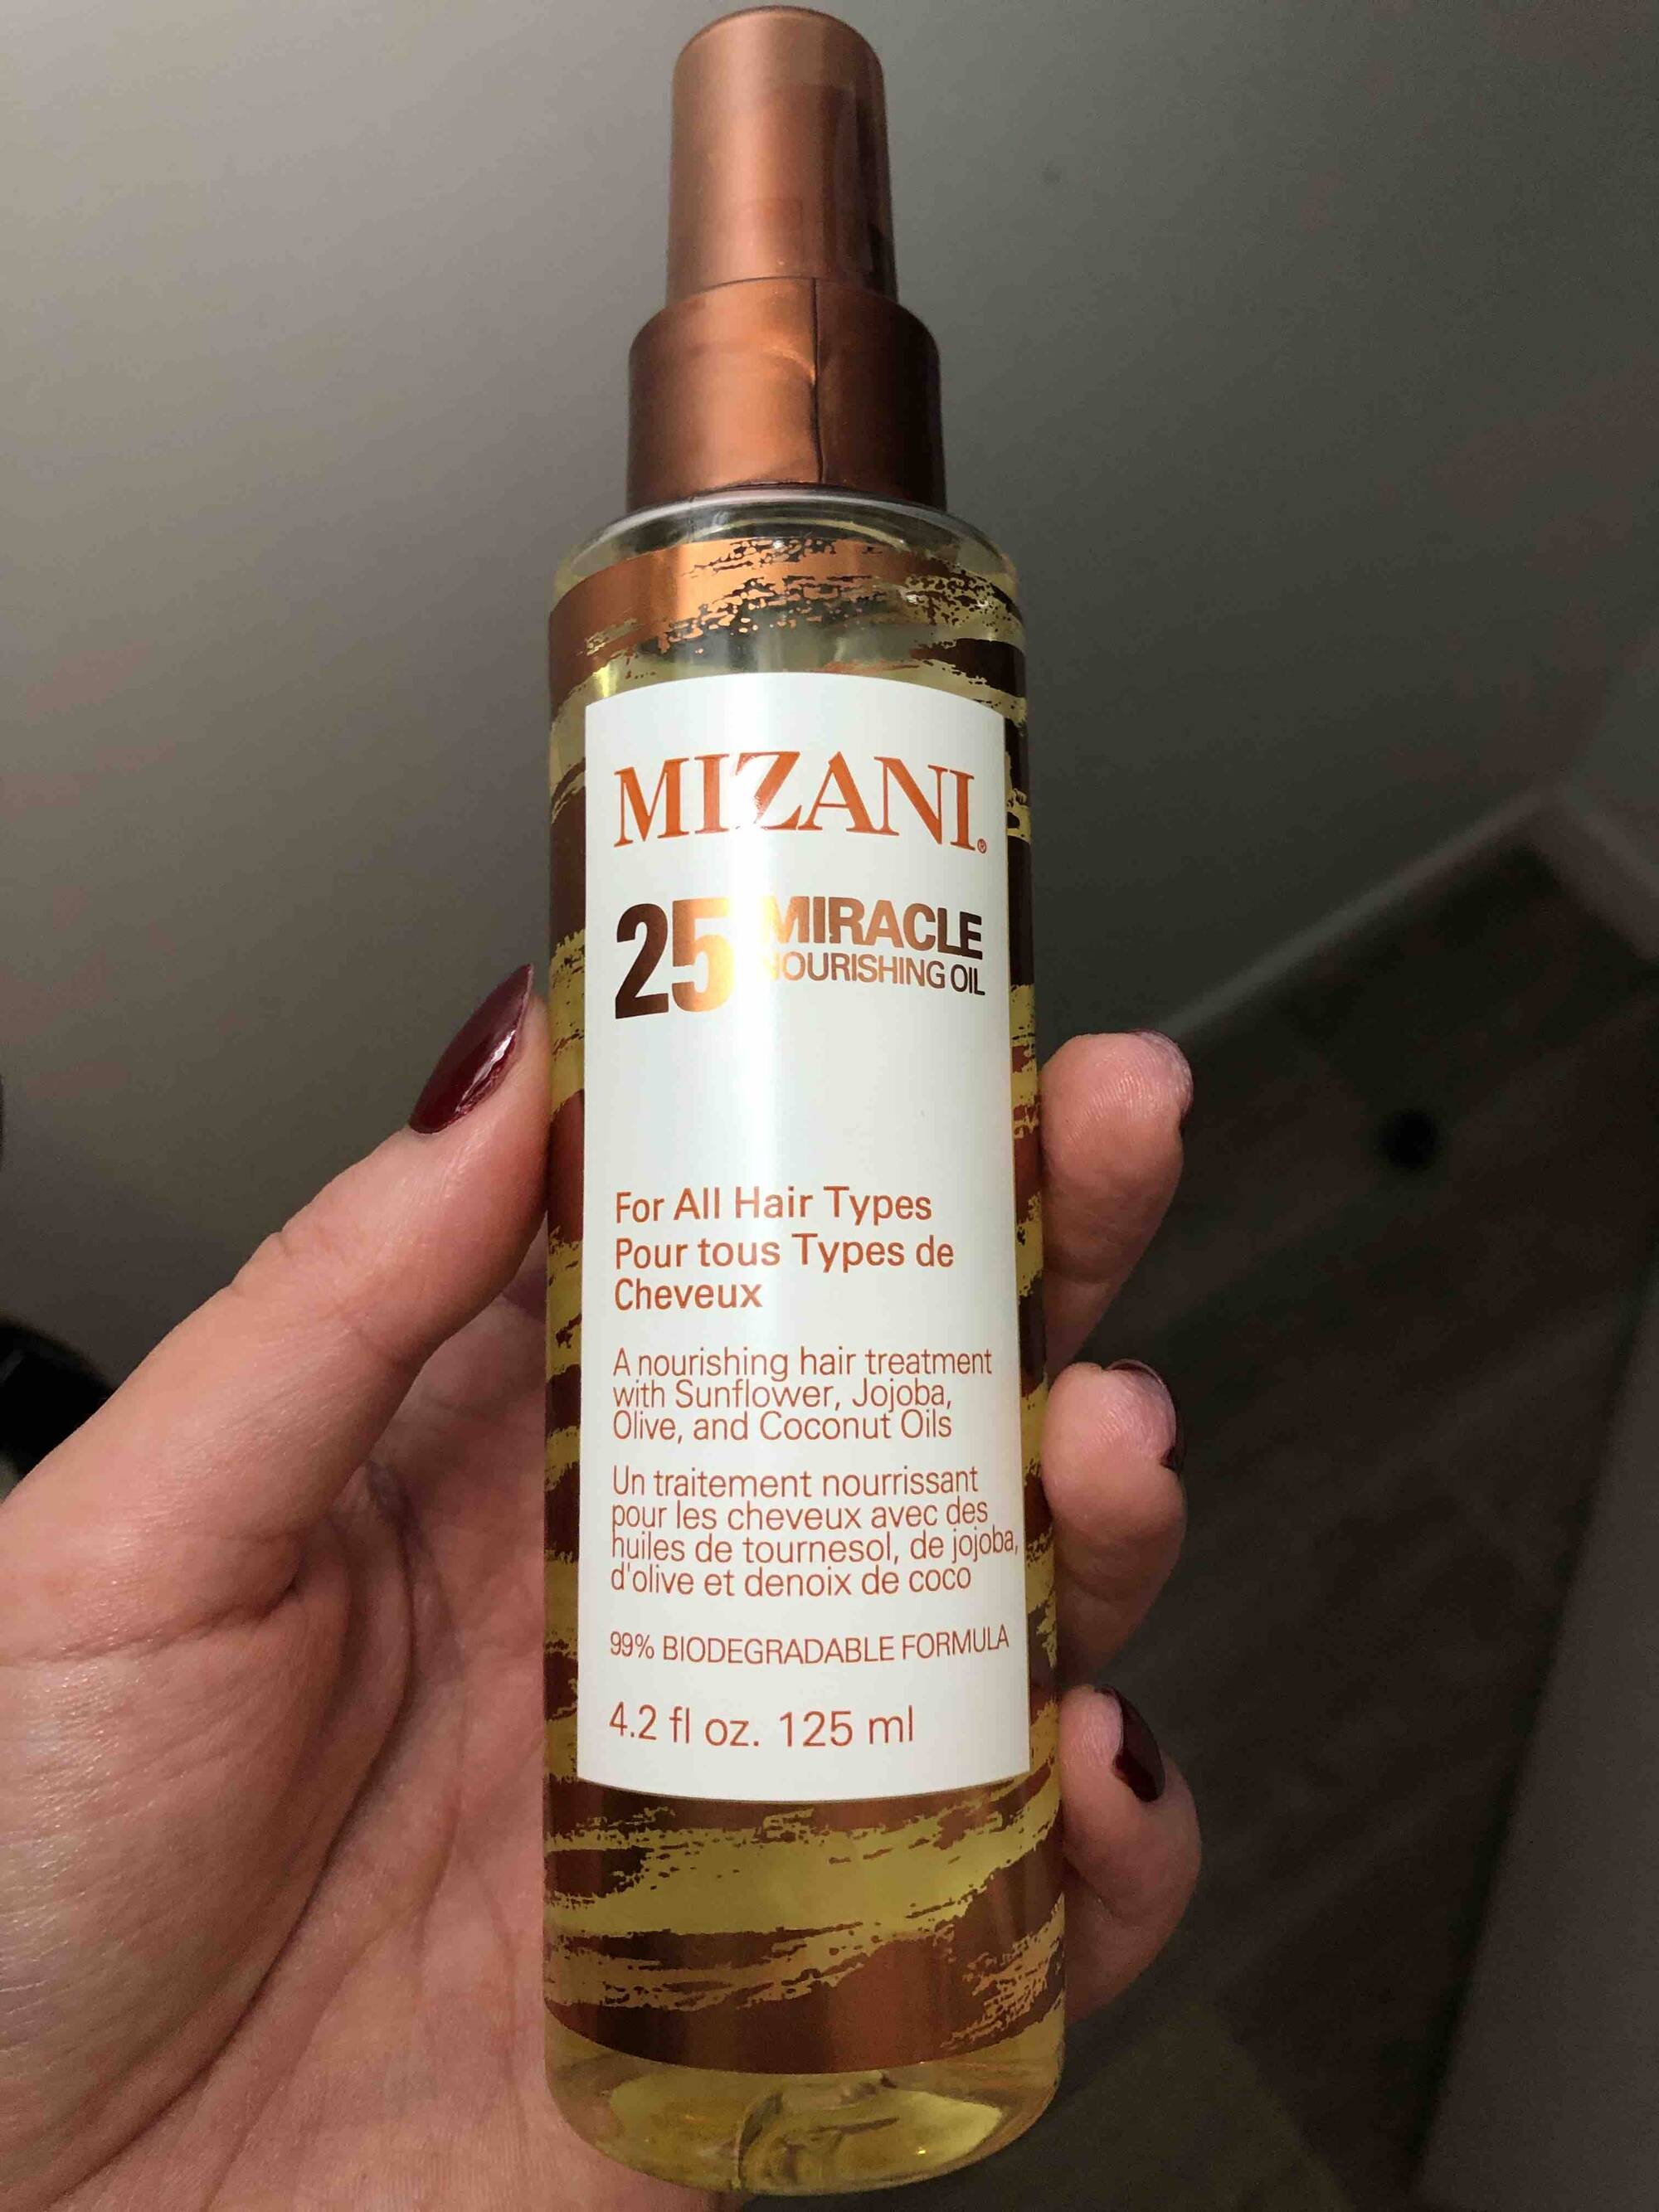 MIZANI - 25 miracle Nourishing oil